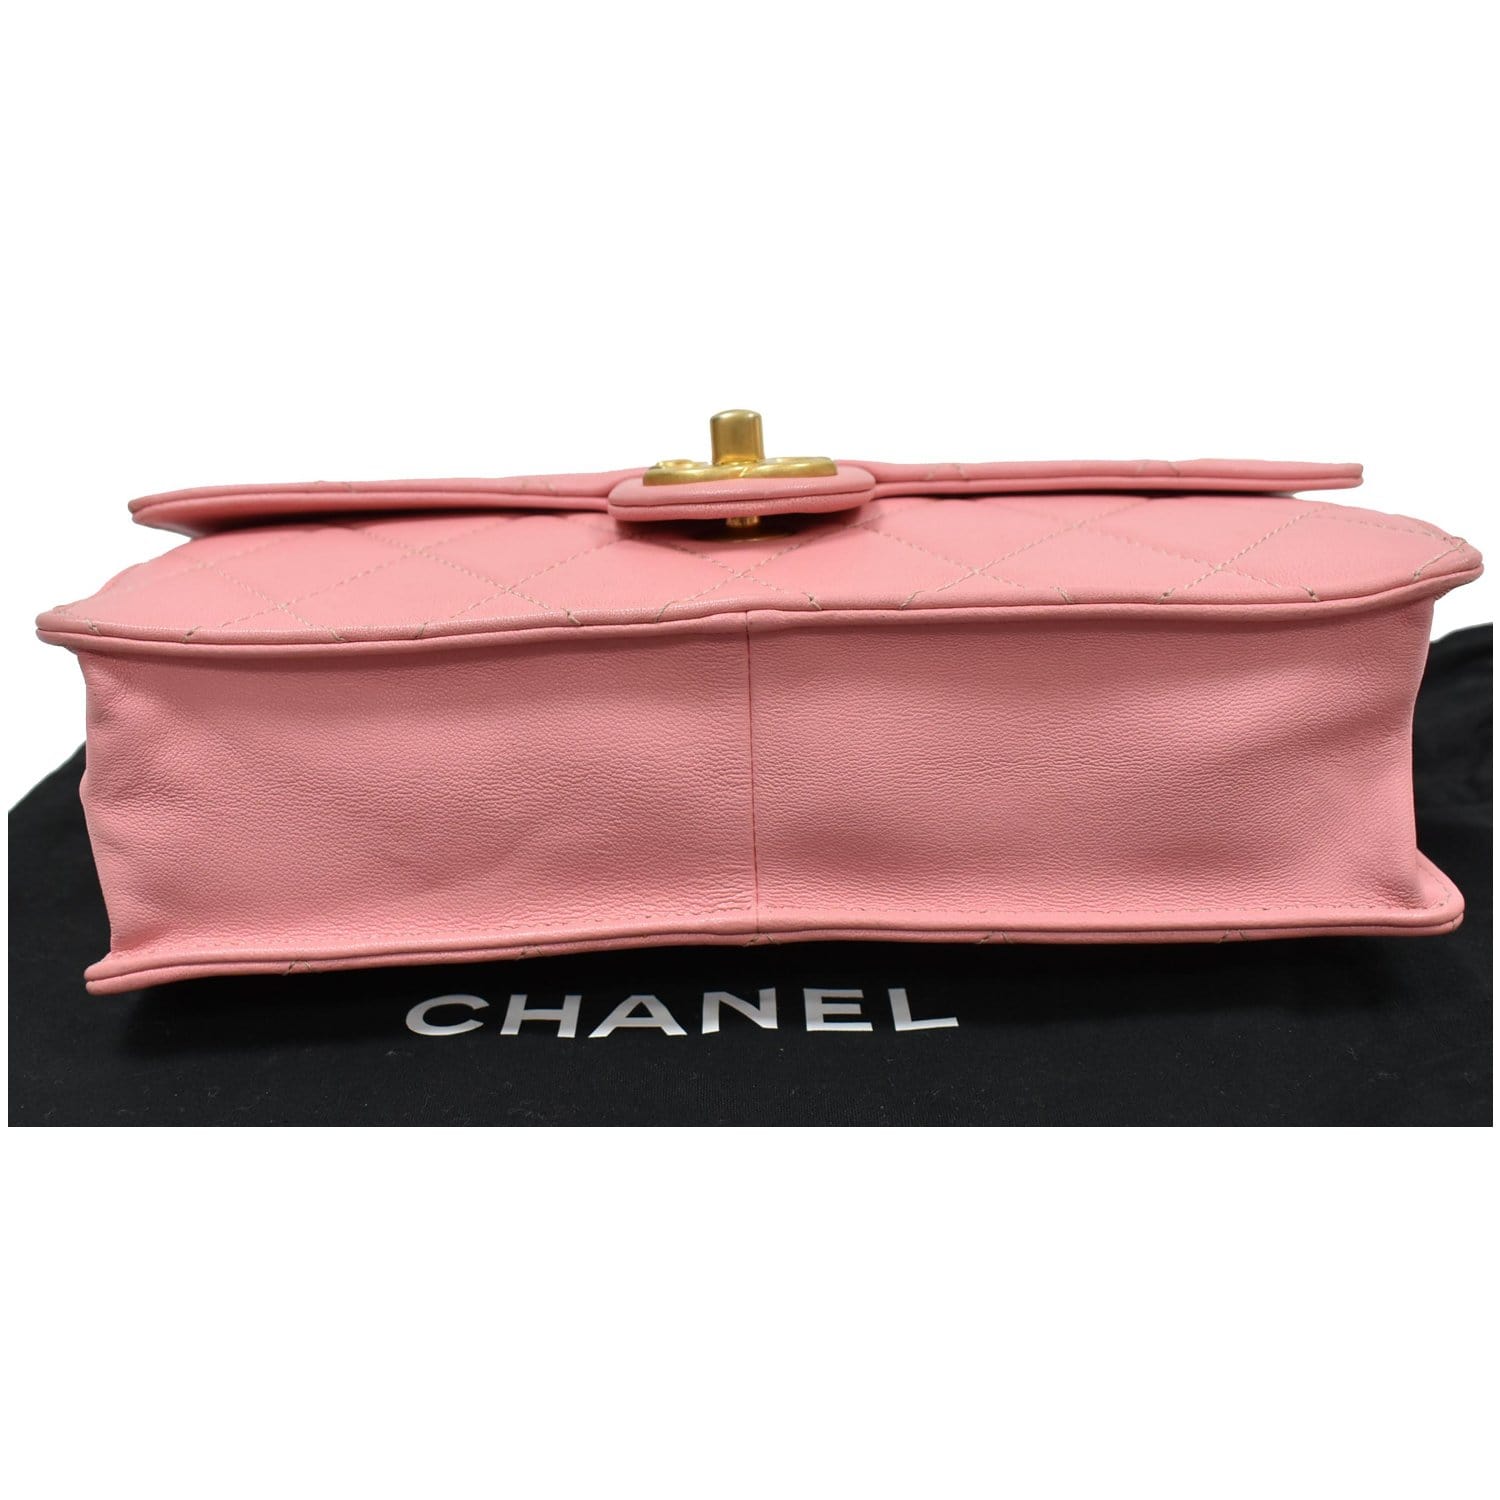 The Chanel Handbag Costume